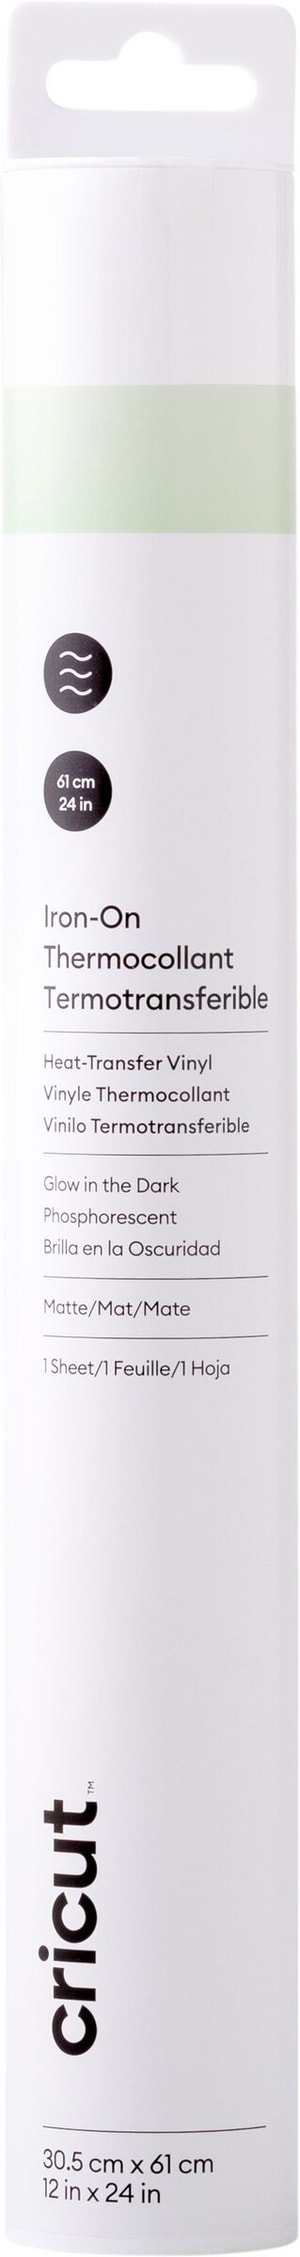 Film thermocollant Glow in the dark 30 x 60 cm